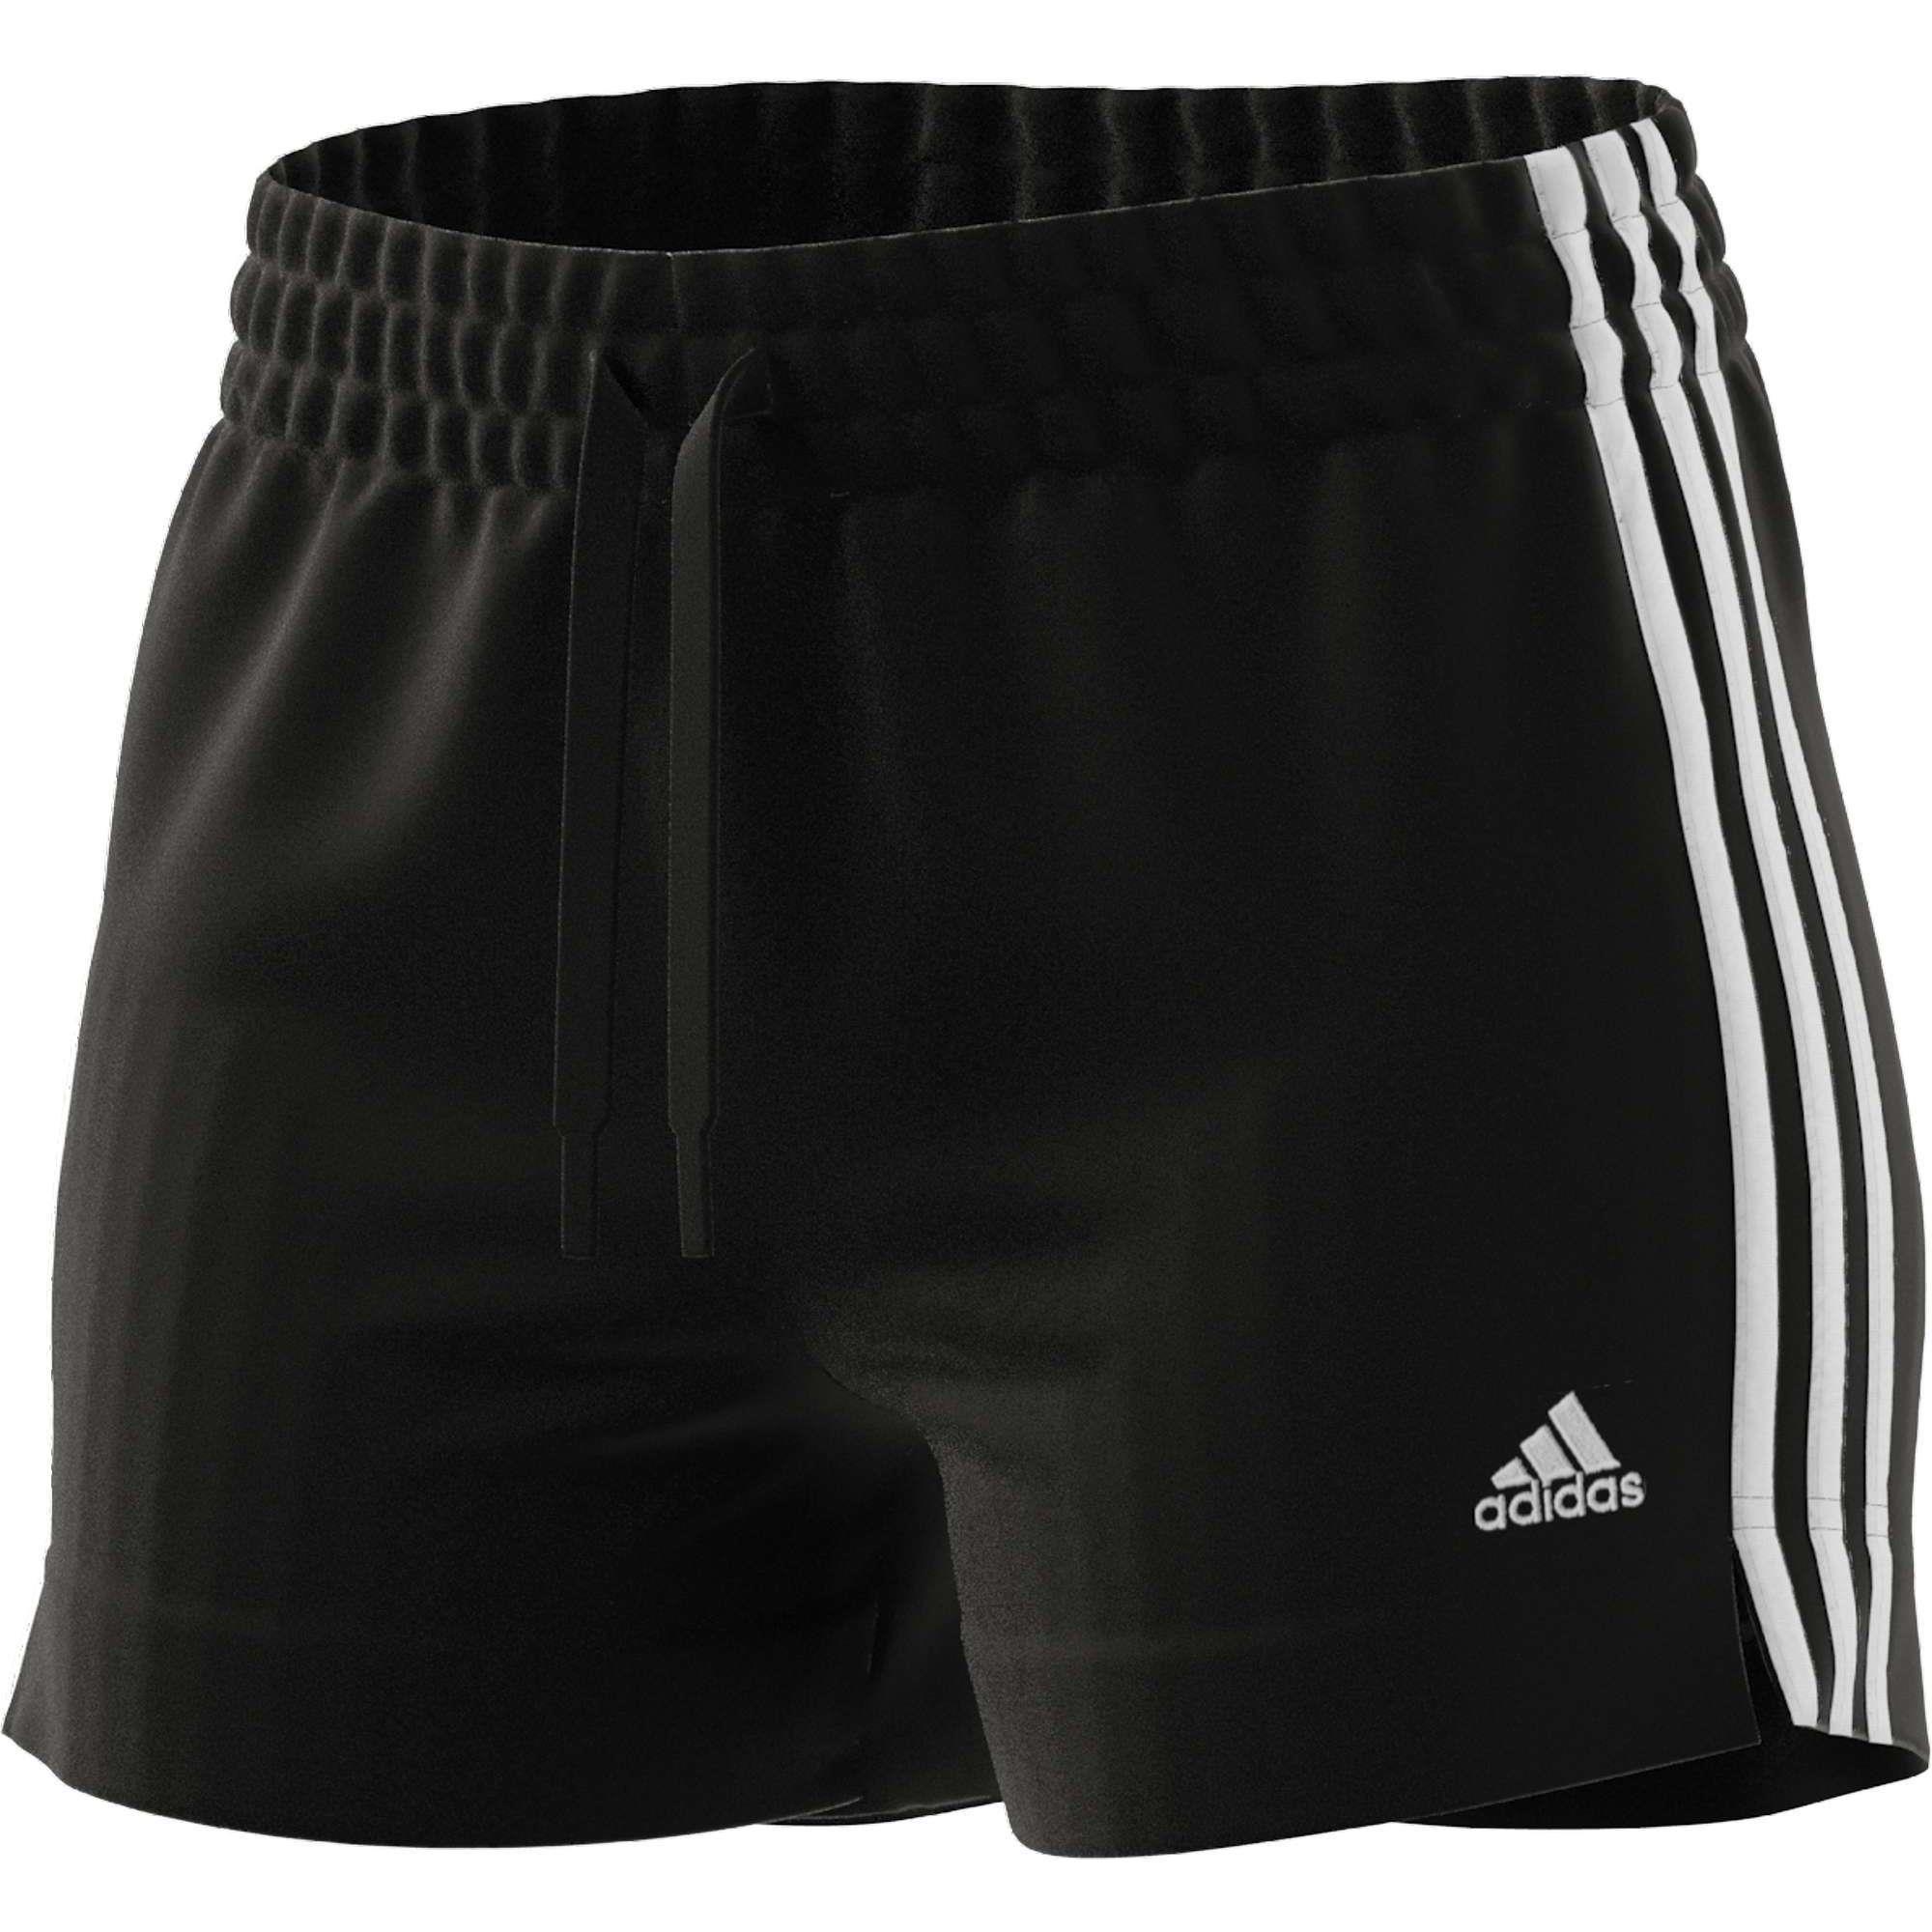 Adidas 3-Stripes short dames black white